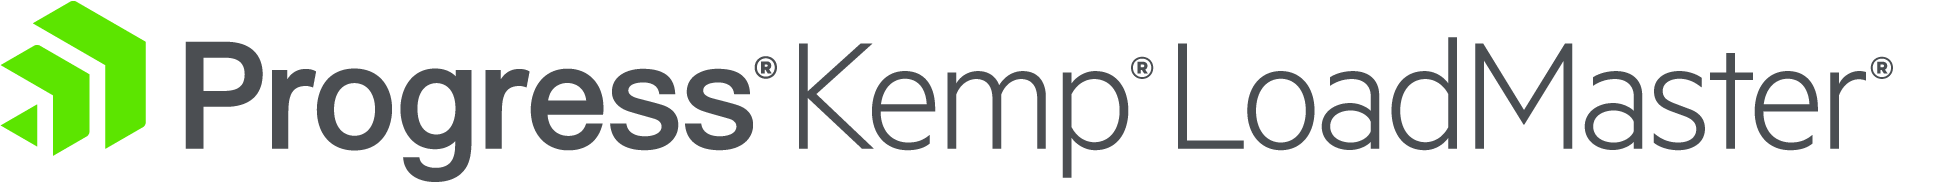 Progress Kemp Logo